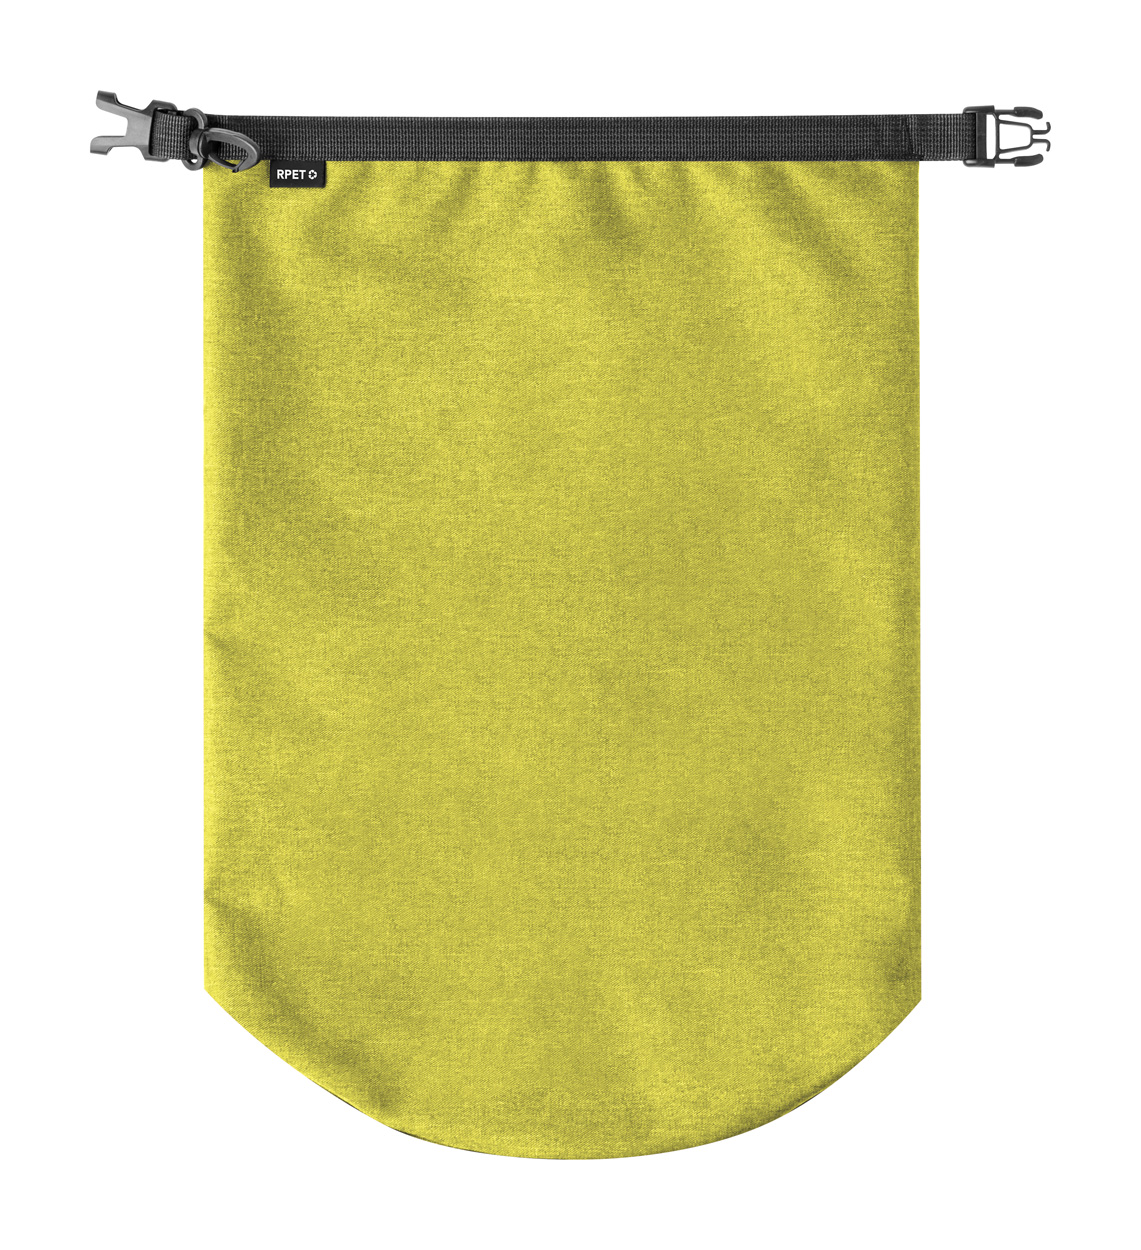 Kasolin RPET boat bag - yellow